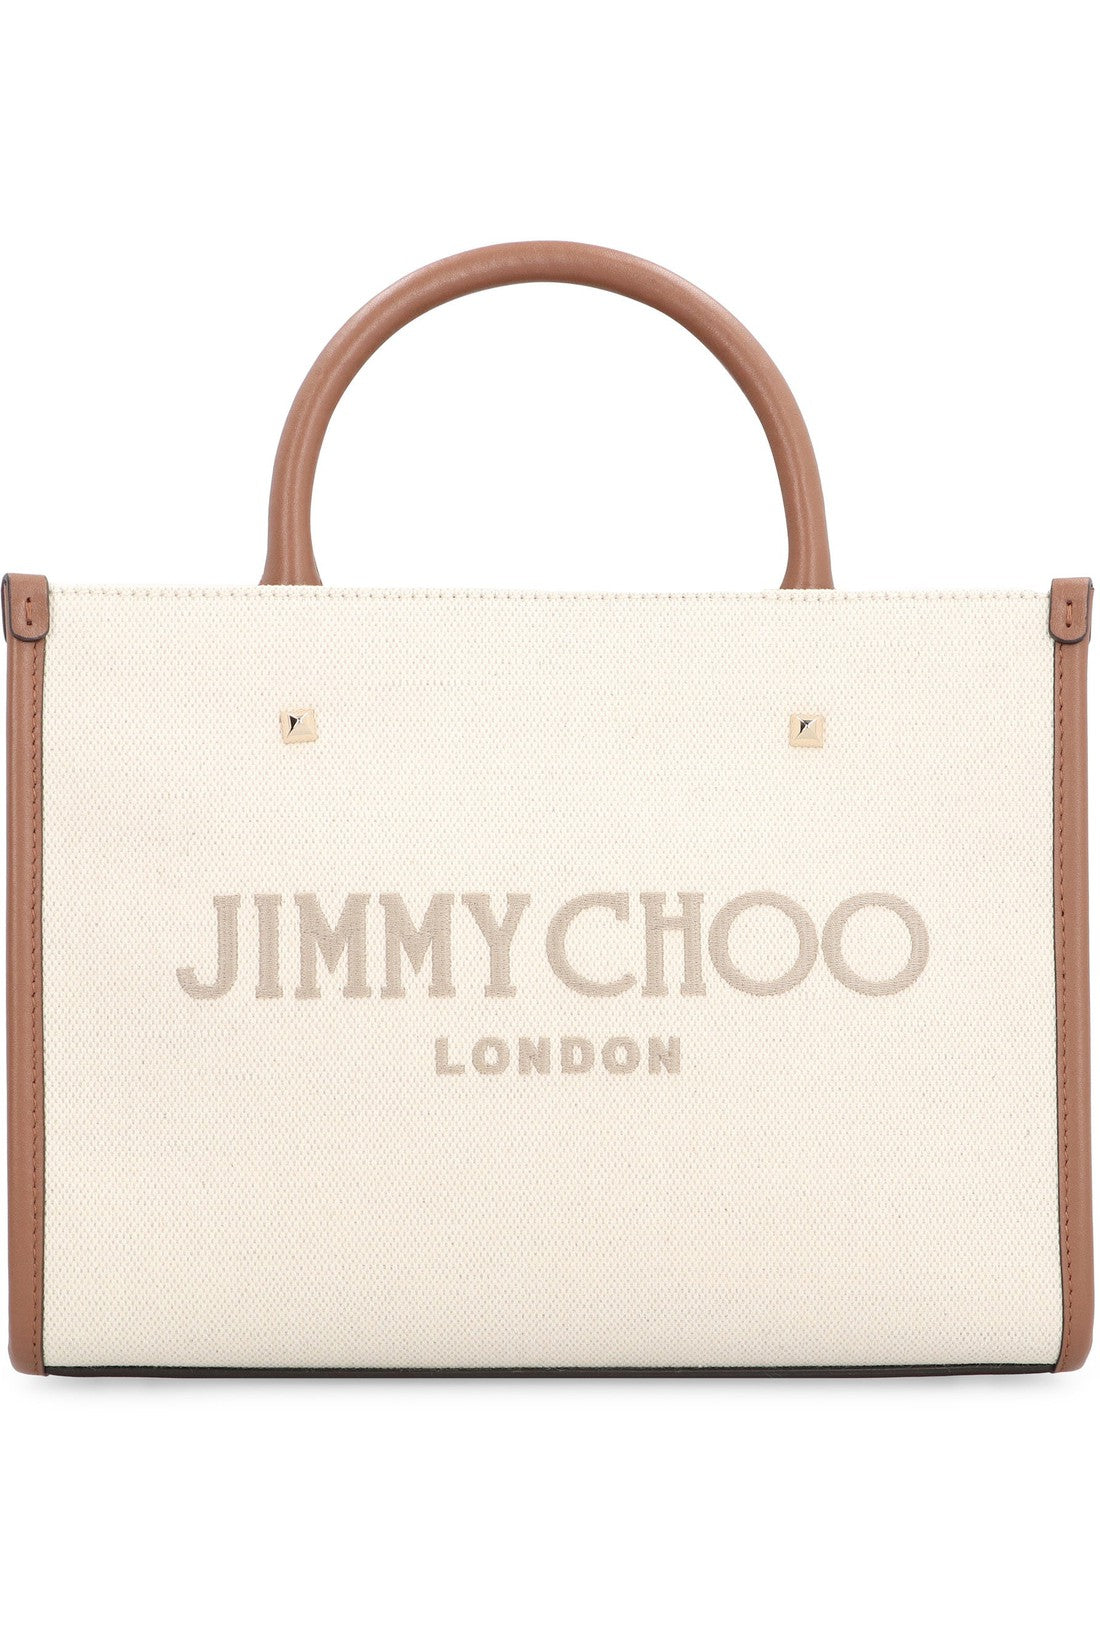 Jimmy Choo-OUTLET-SALE-Avenue S tote bag-ARCHIVIST